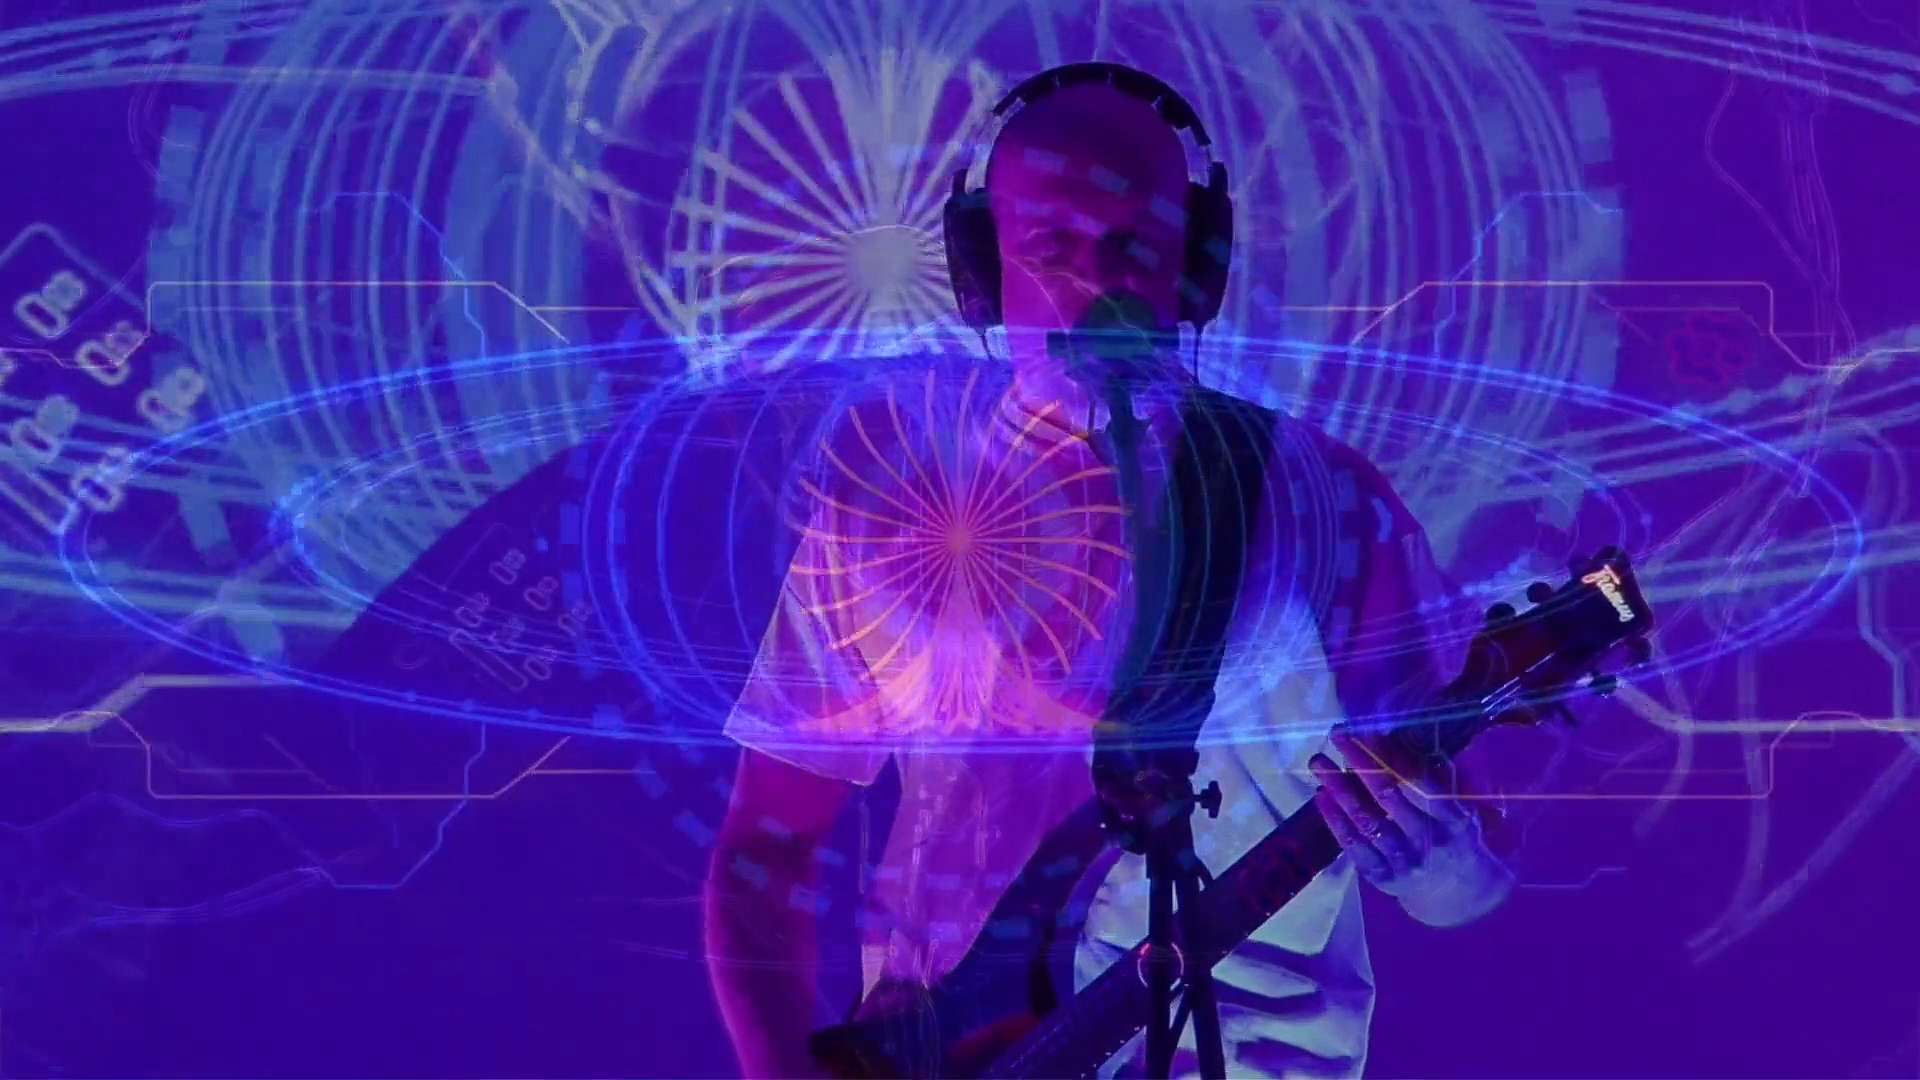 Devin Townsend - Infinity Live Stream 05/02/2022